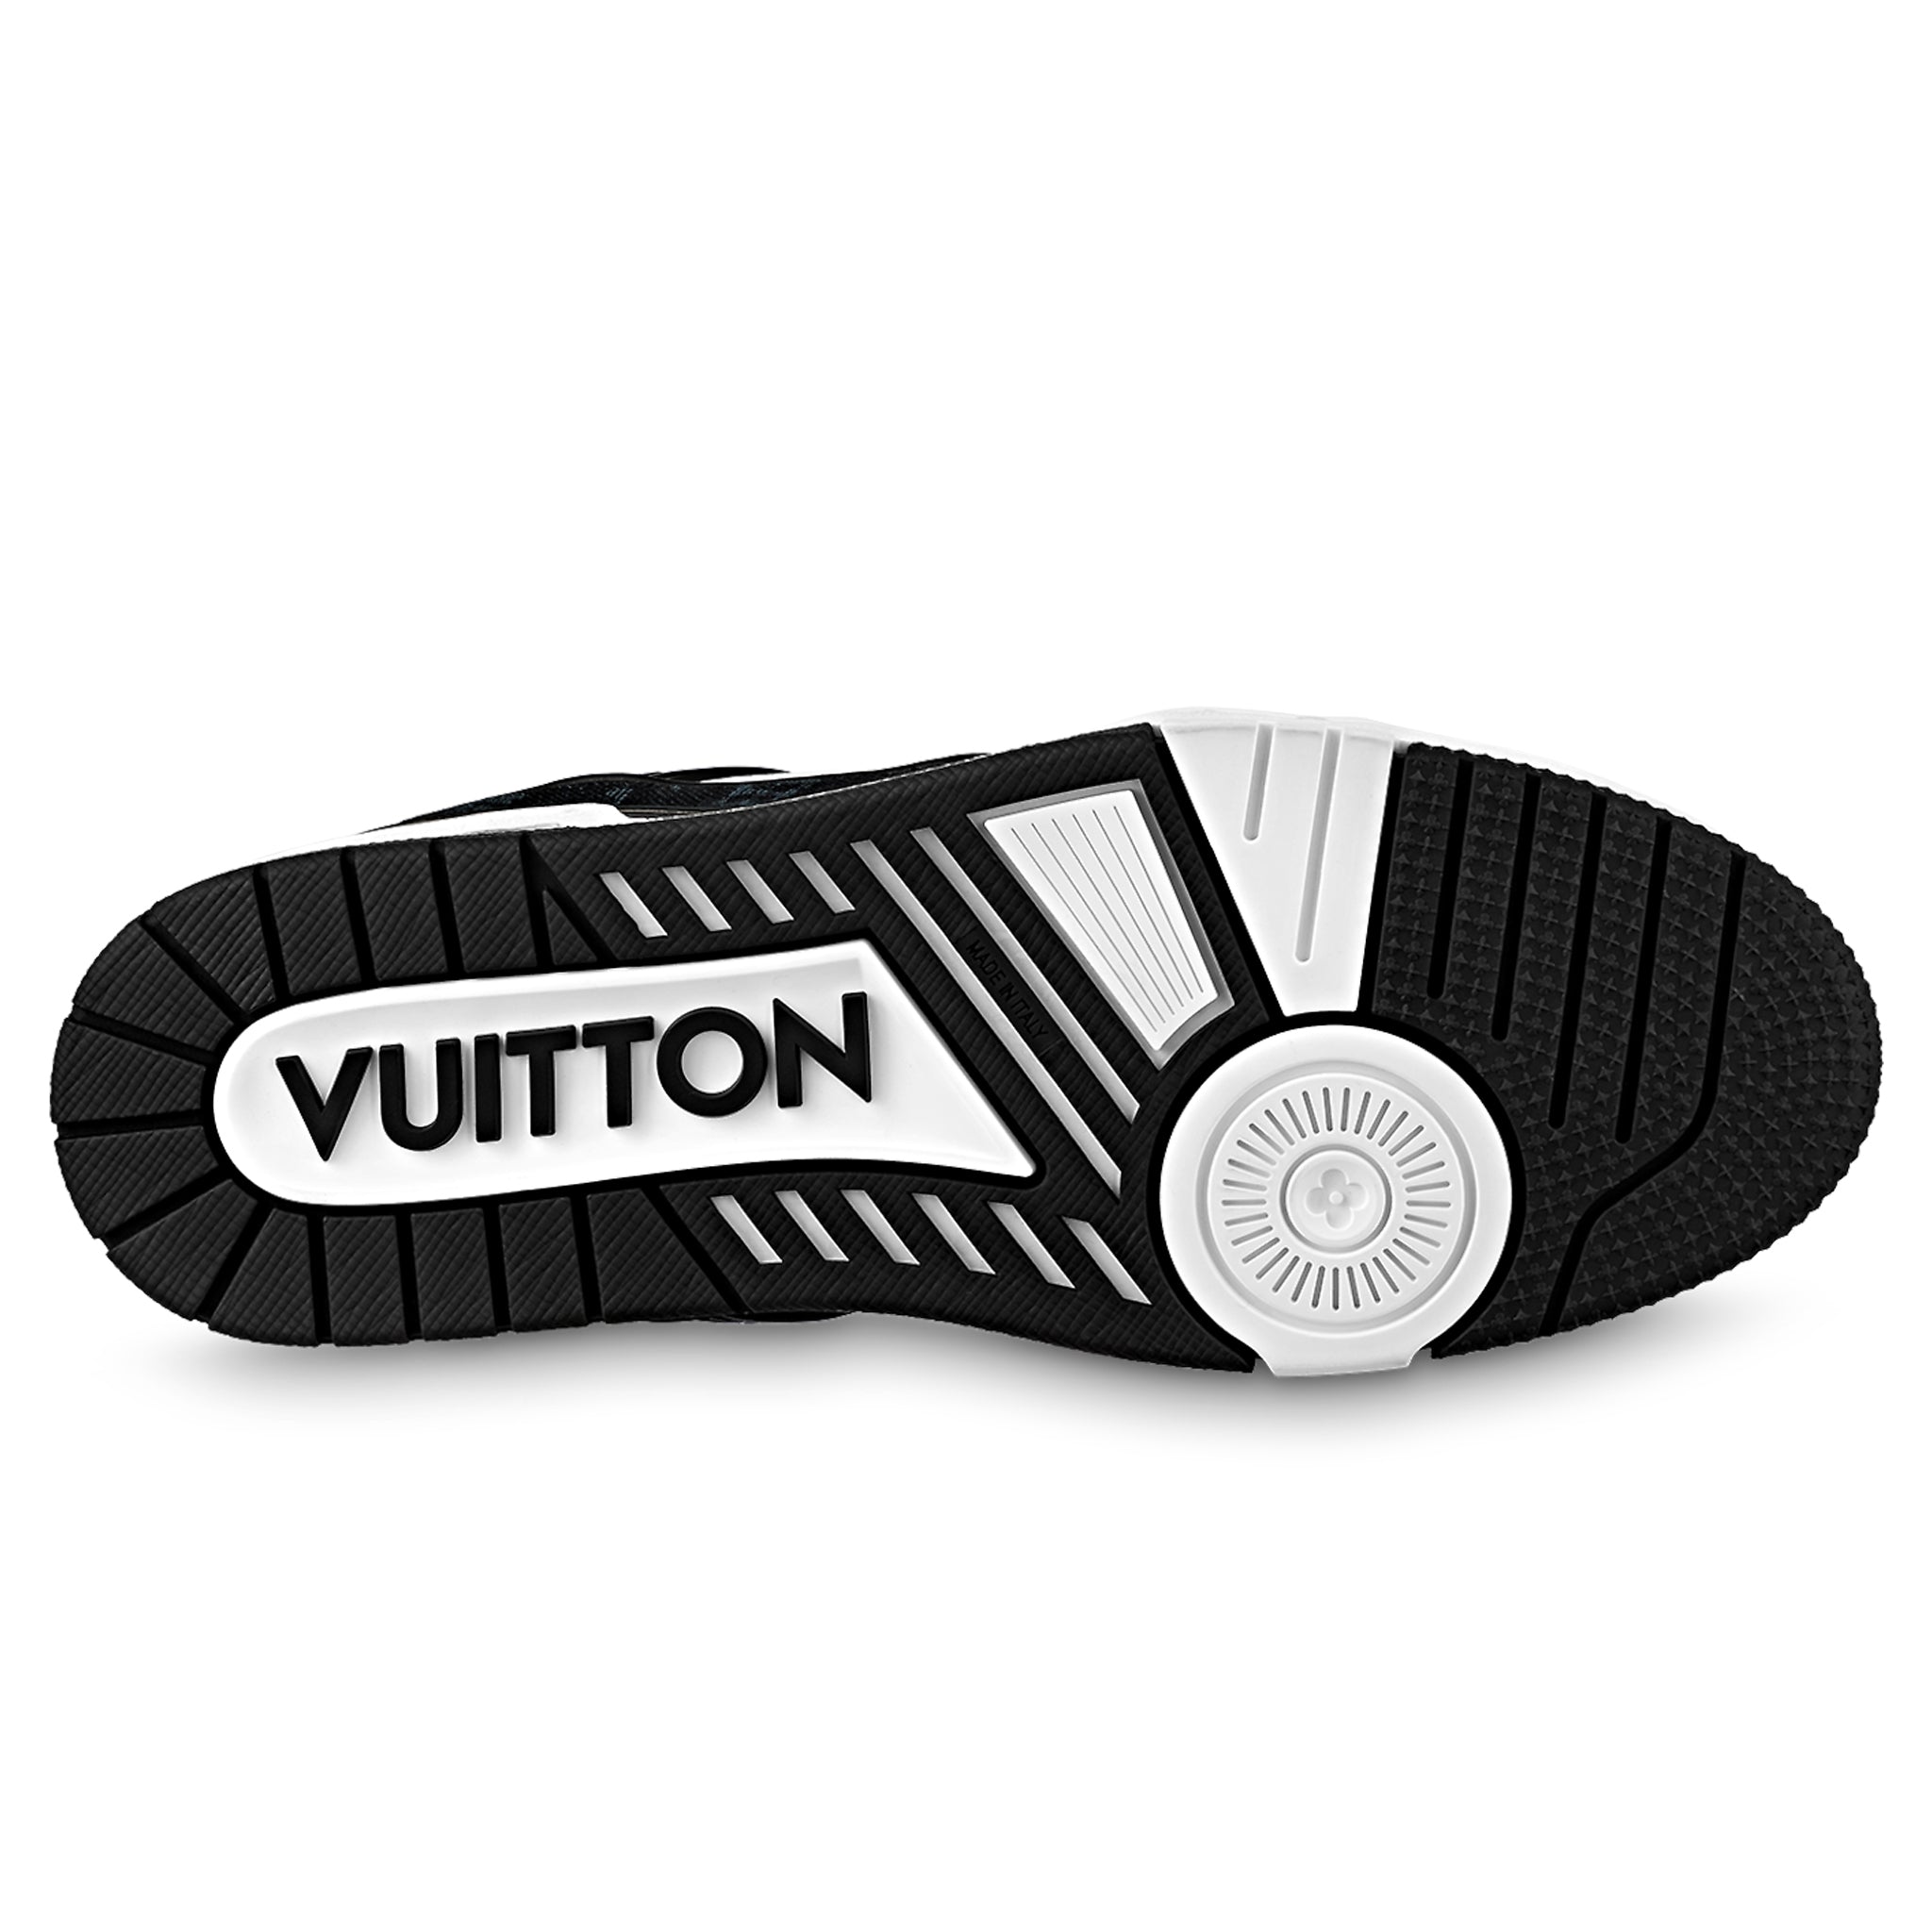 Louis Vuitton LV Trainers Monogram Denim (Black)